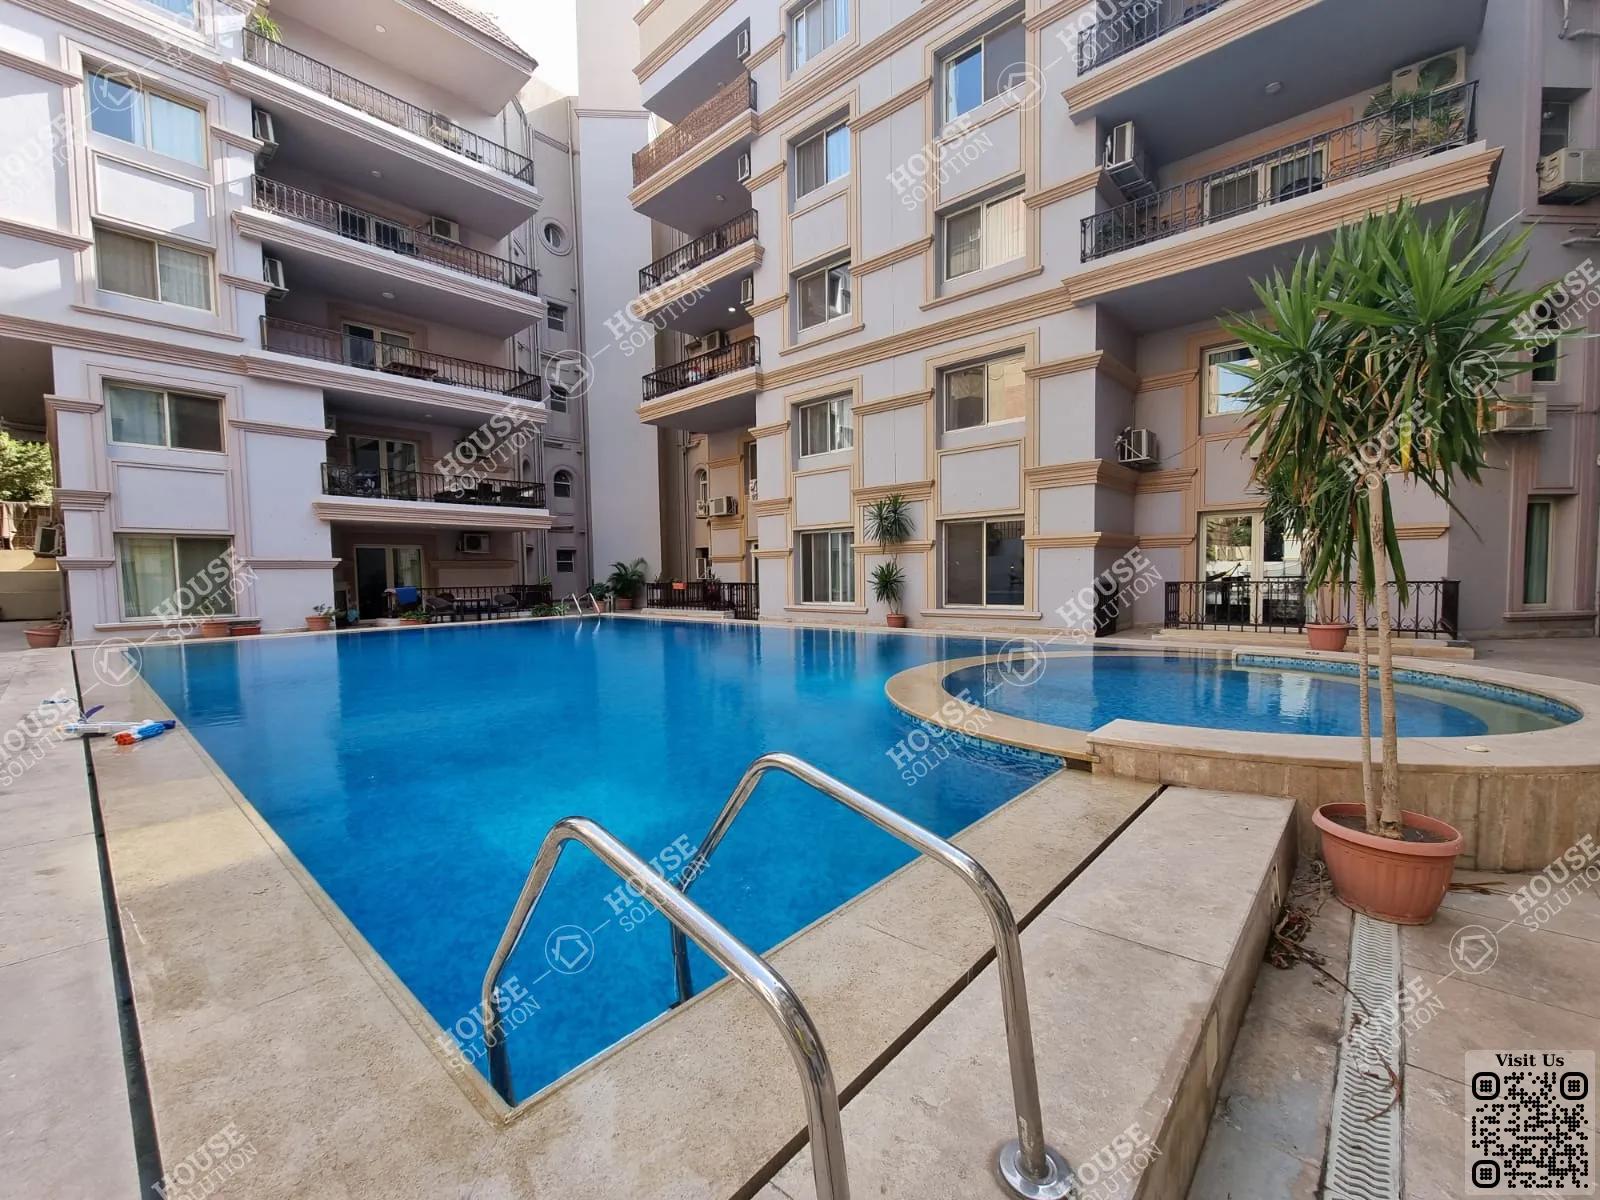 SHARED SWIMMING POOL  @ Duplexes For Rent In Maadi Maadi Sarayat Area: 350 m² consists of 3 Bedrooms 3 Bathrooms Modern furnished 5 stars #5856-1